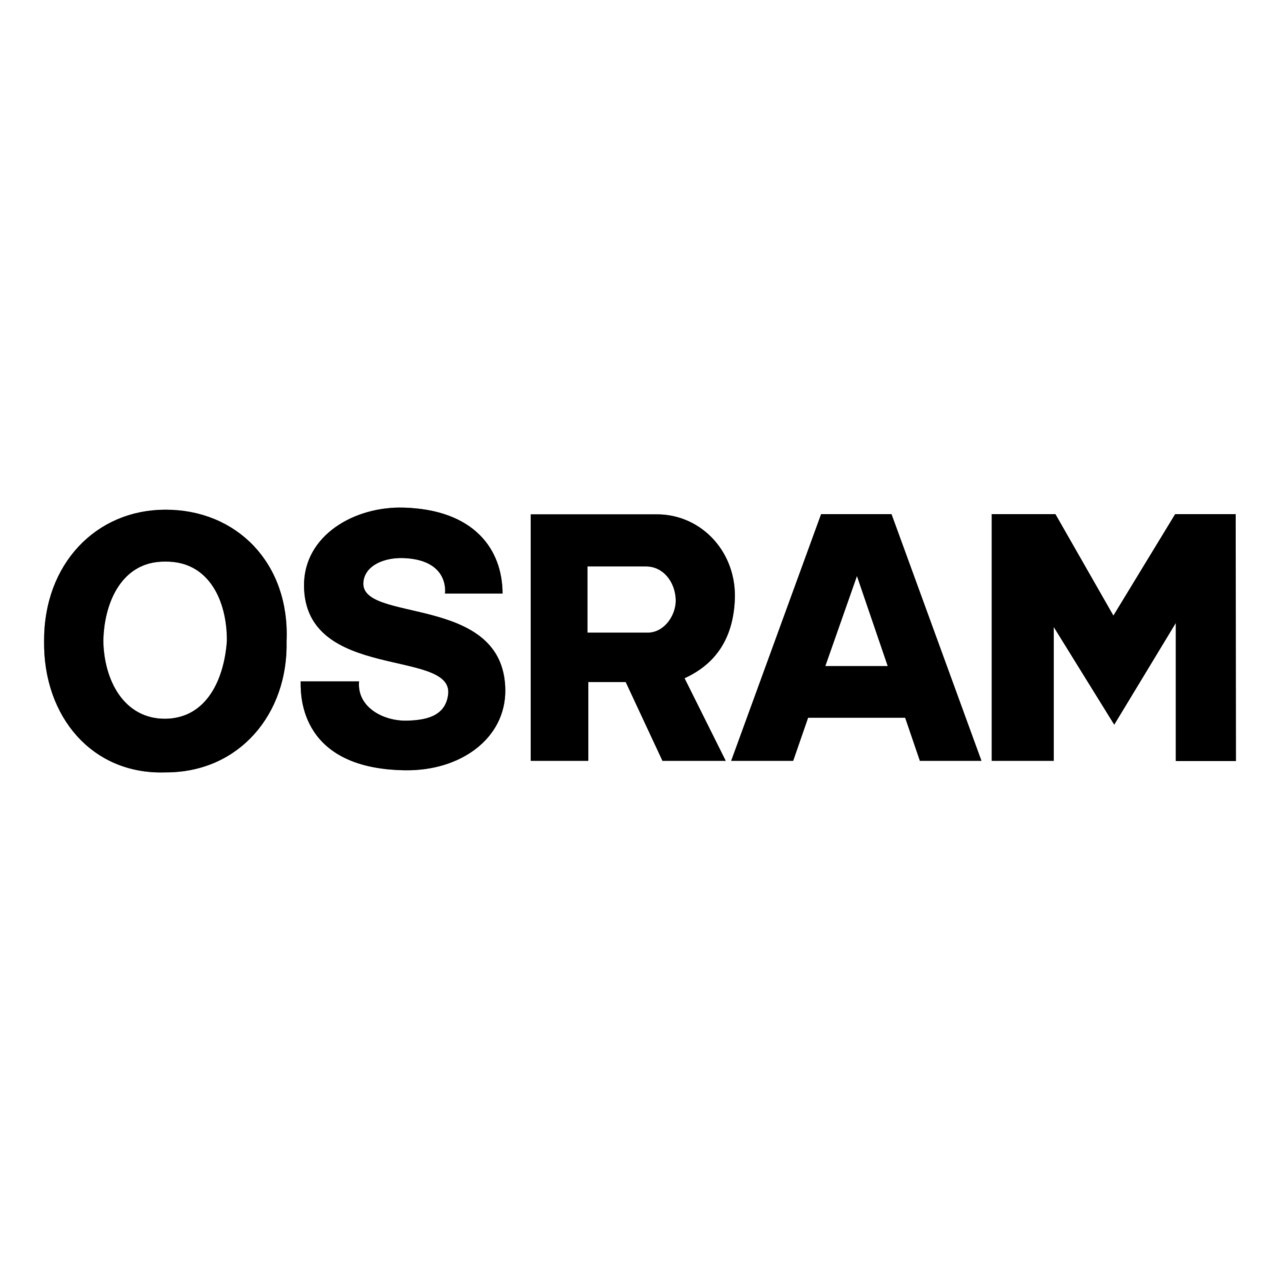 osram-logo-black-and-white-1